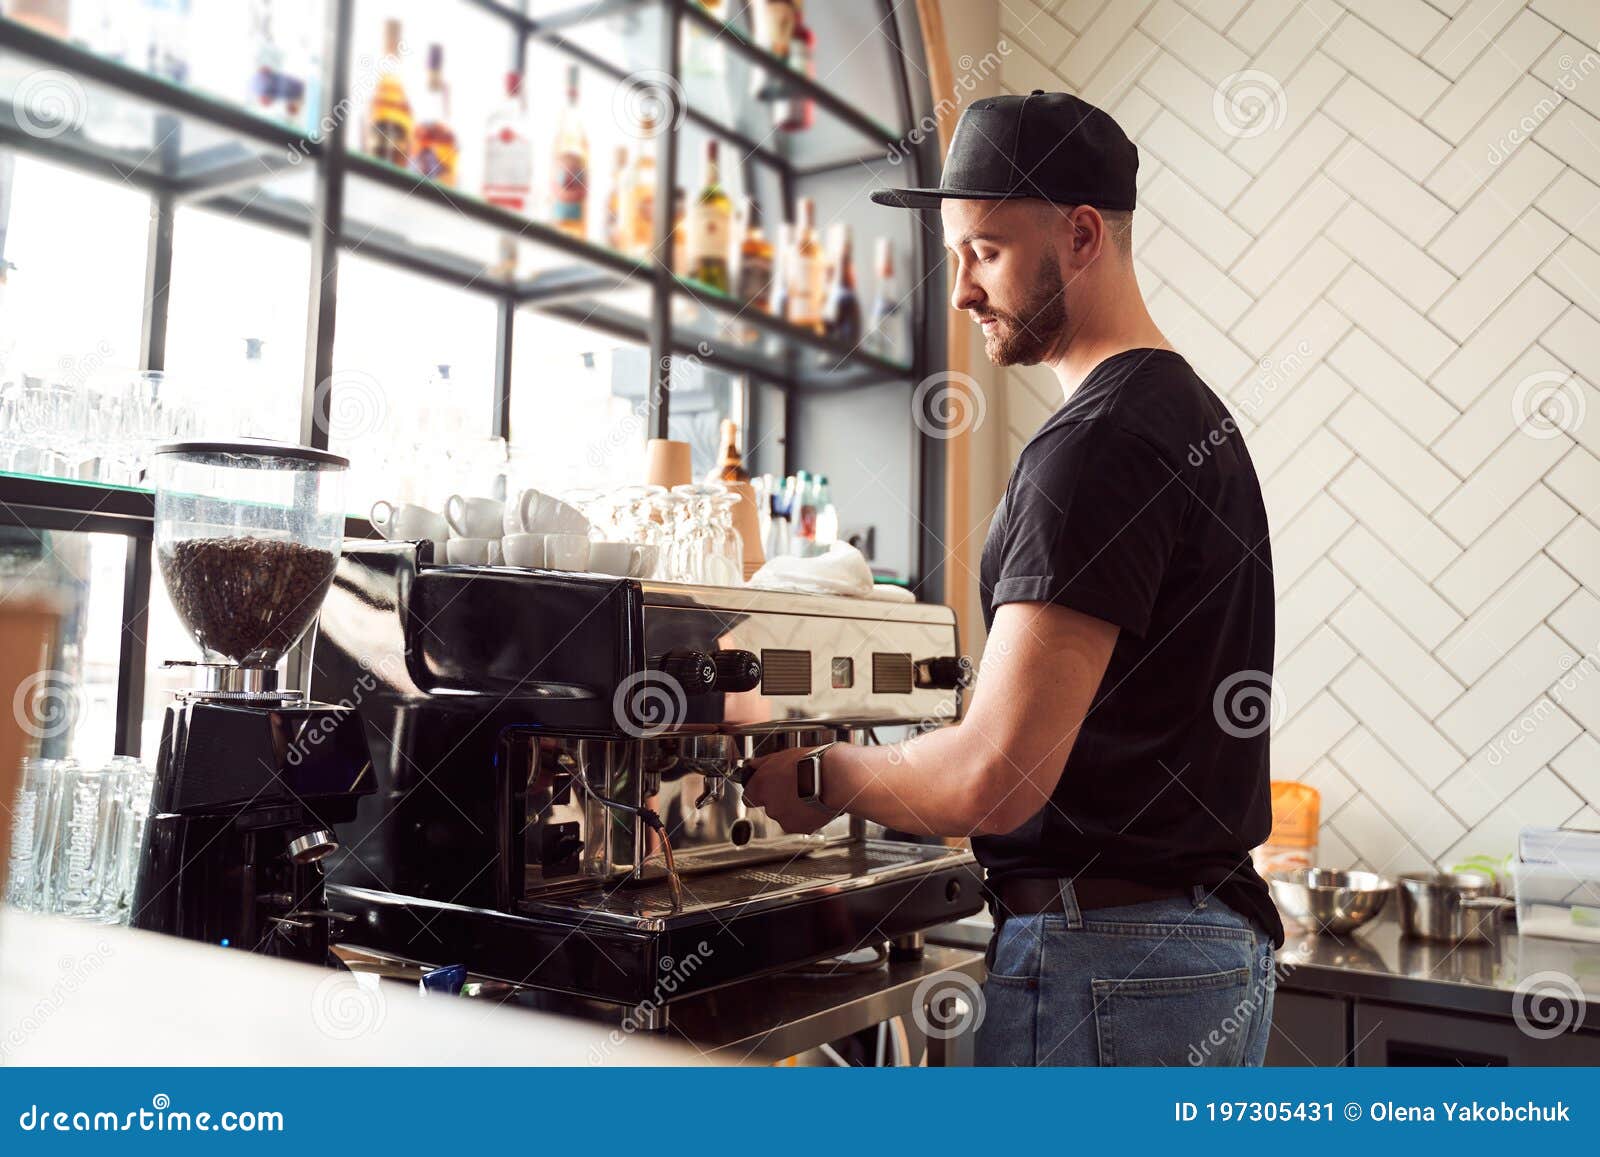 male barista working on coffee machine